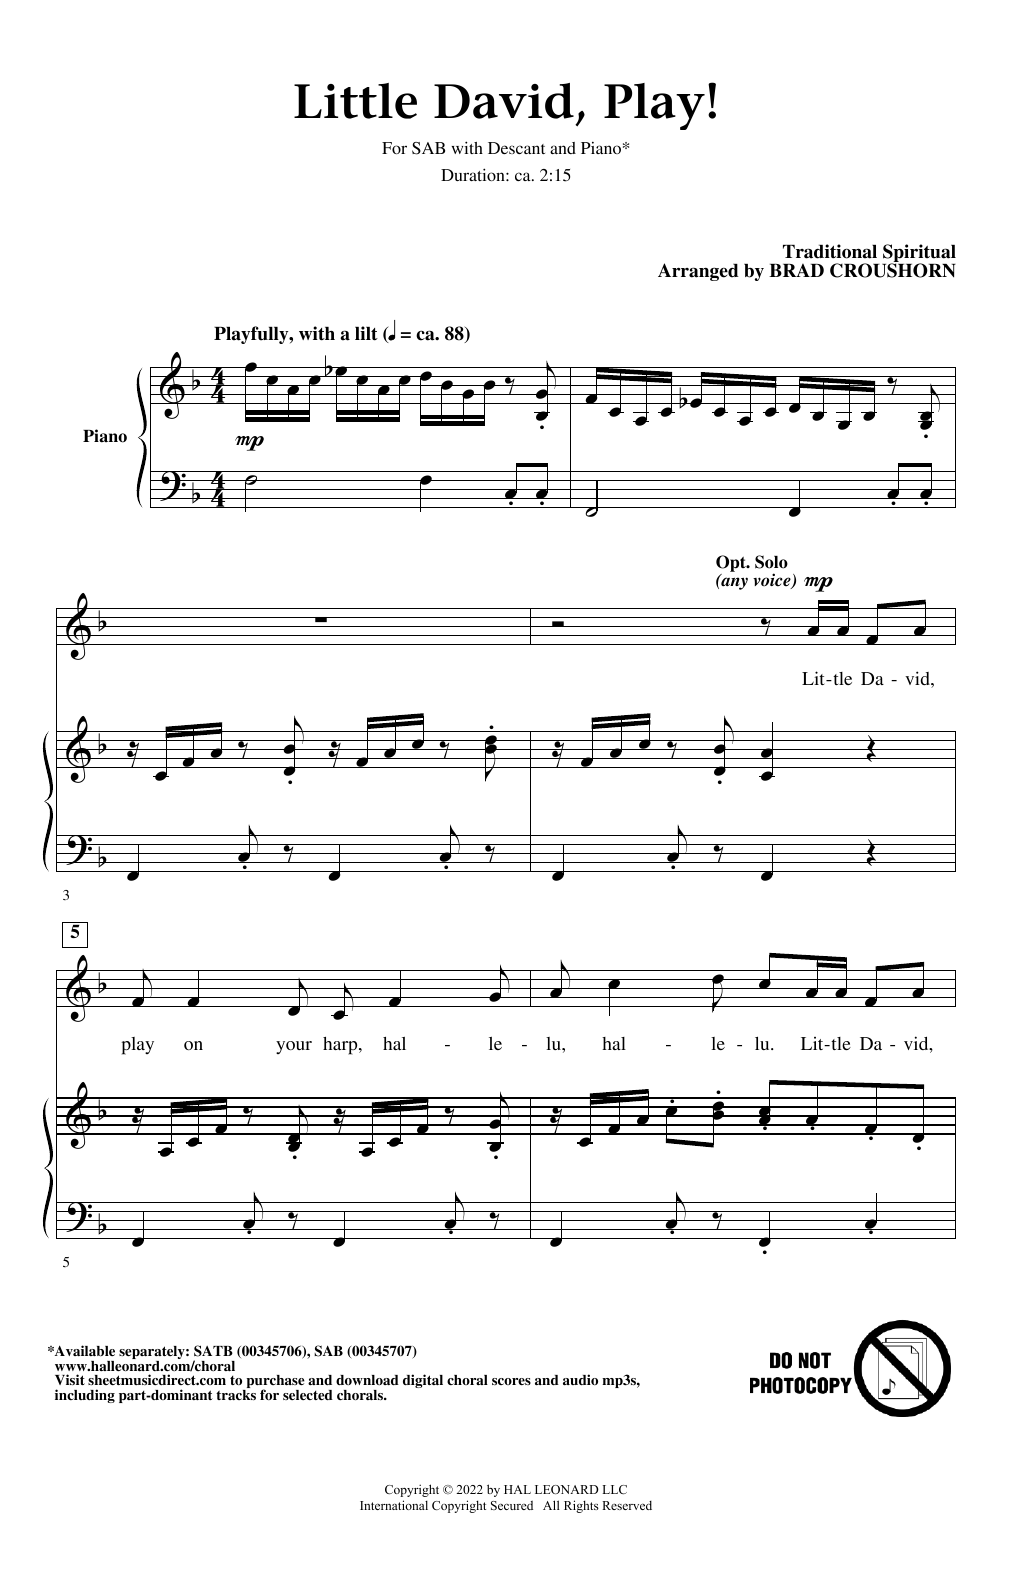 Traditional Spiritual Little David, Play! (arr. Brad Croushorn) Sheet Music Notes & Chords for SAB Choir - Download or Print PDF